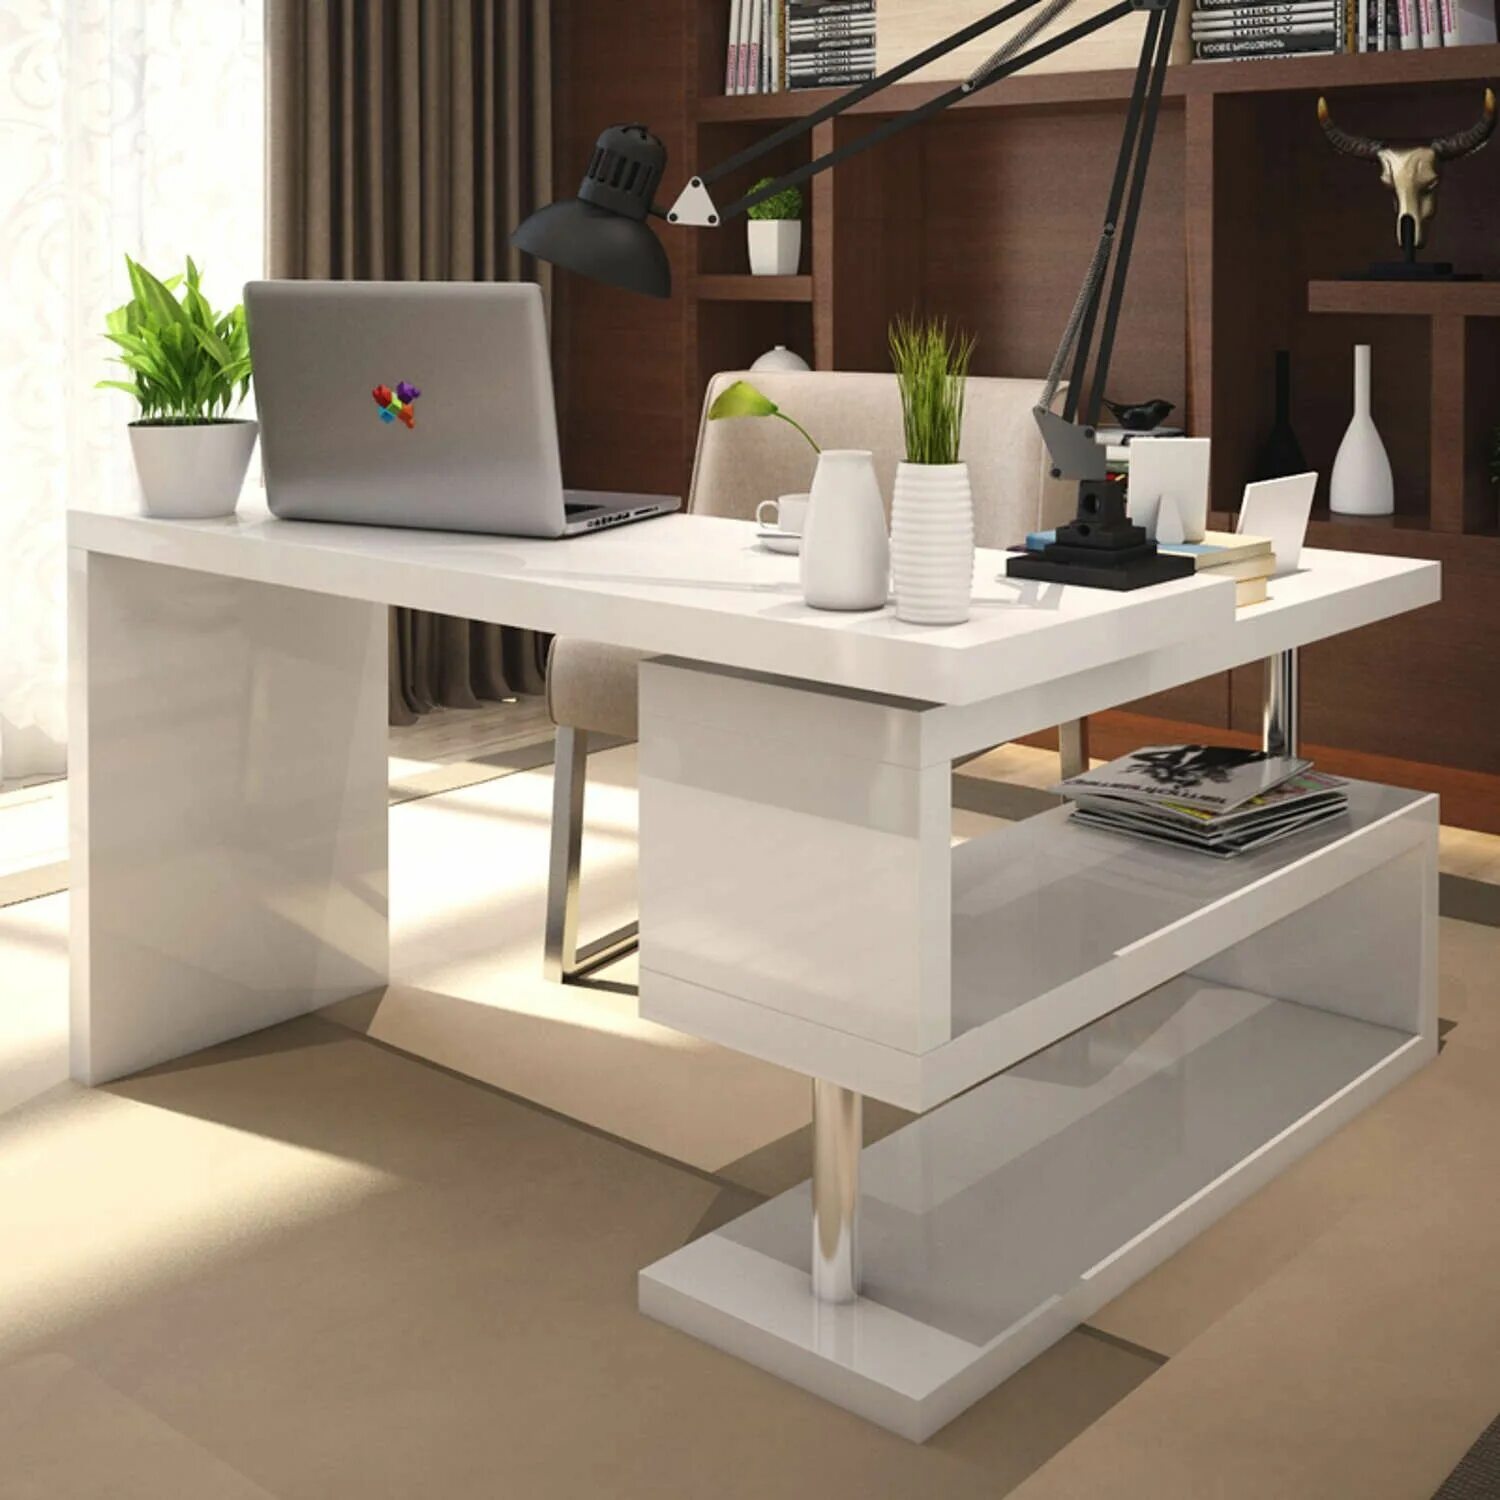 Стол компьютерный Homeoffice (белый, 1200х550х964 мм). Стол Corner Desk Loft. Стильный стол. Современный письменный стол. Стильные письменные